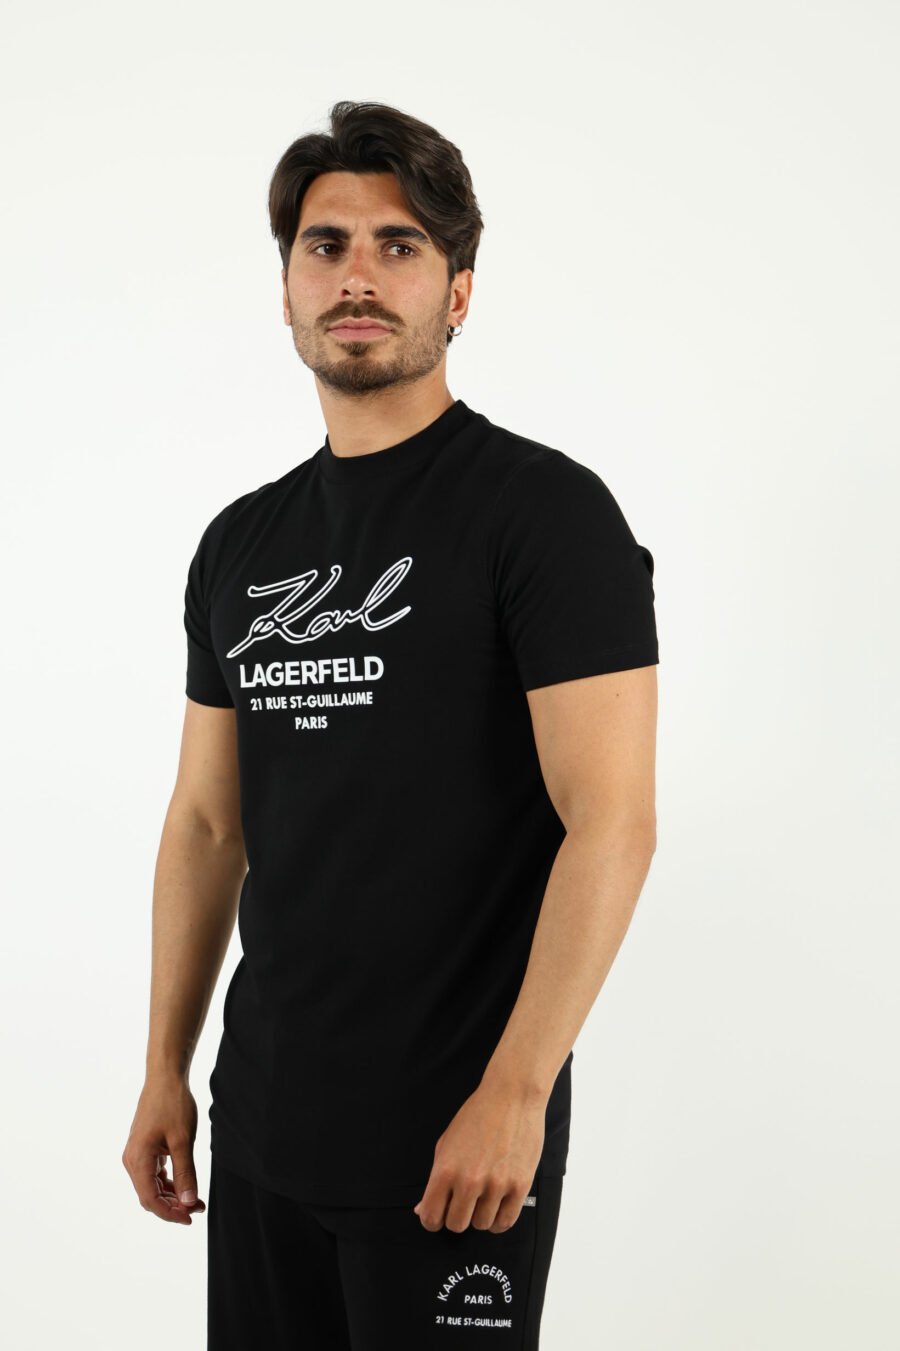 Camiseta negra con maxilogo firma delineado "rue st guillaume" - number13941